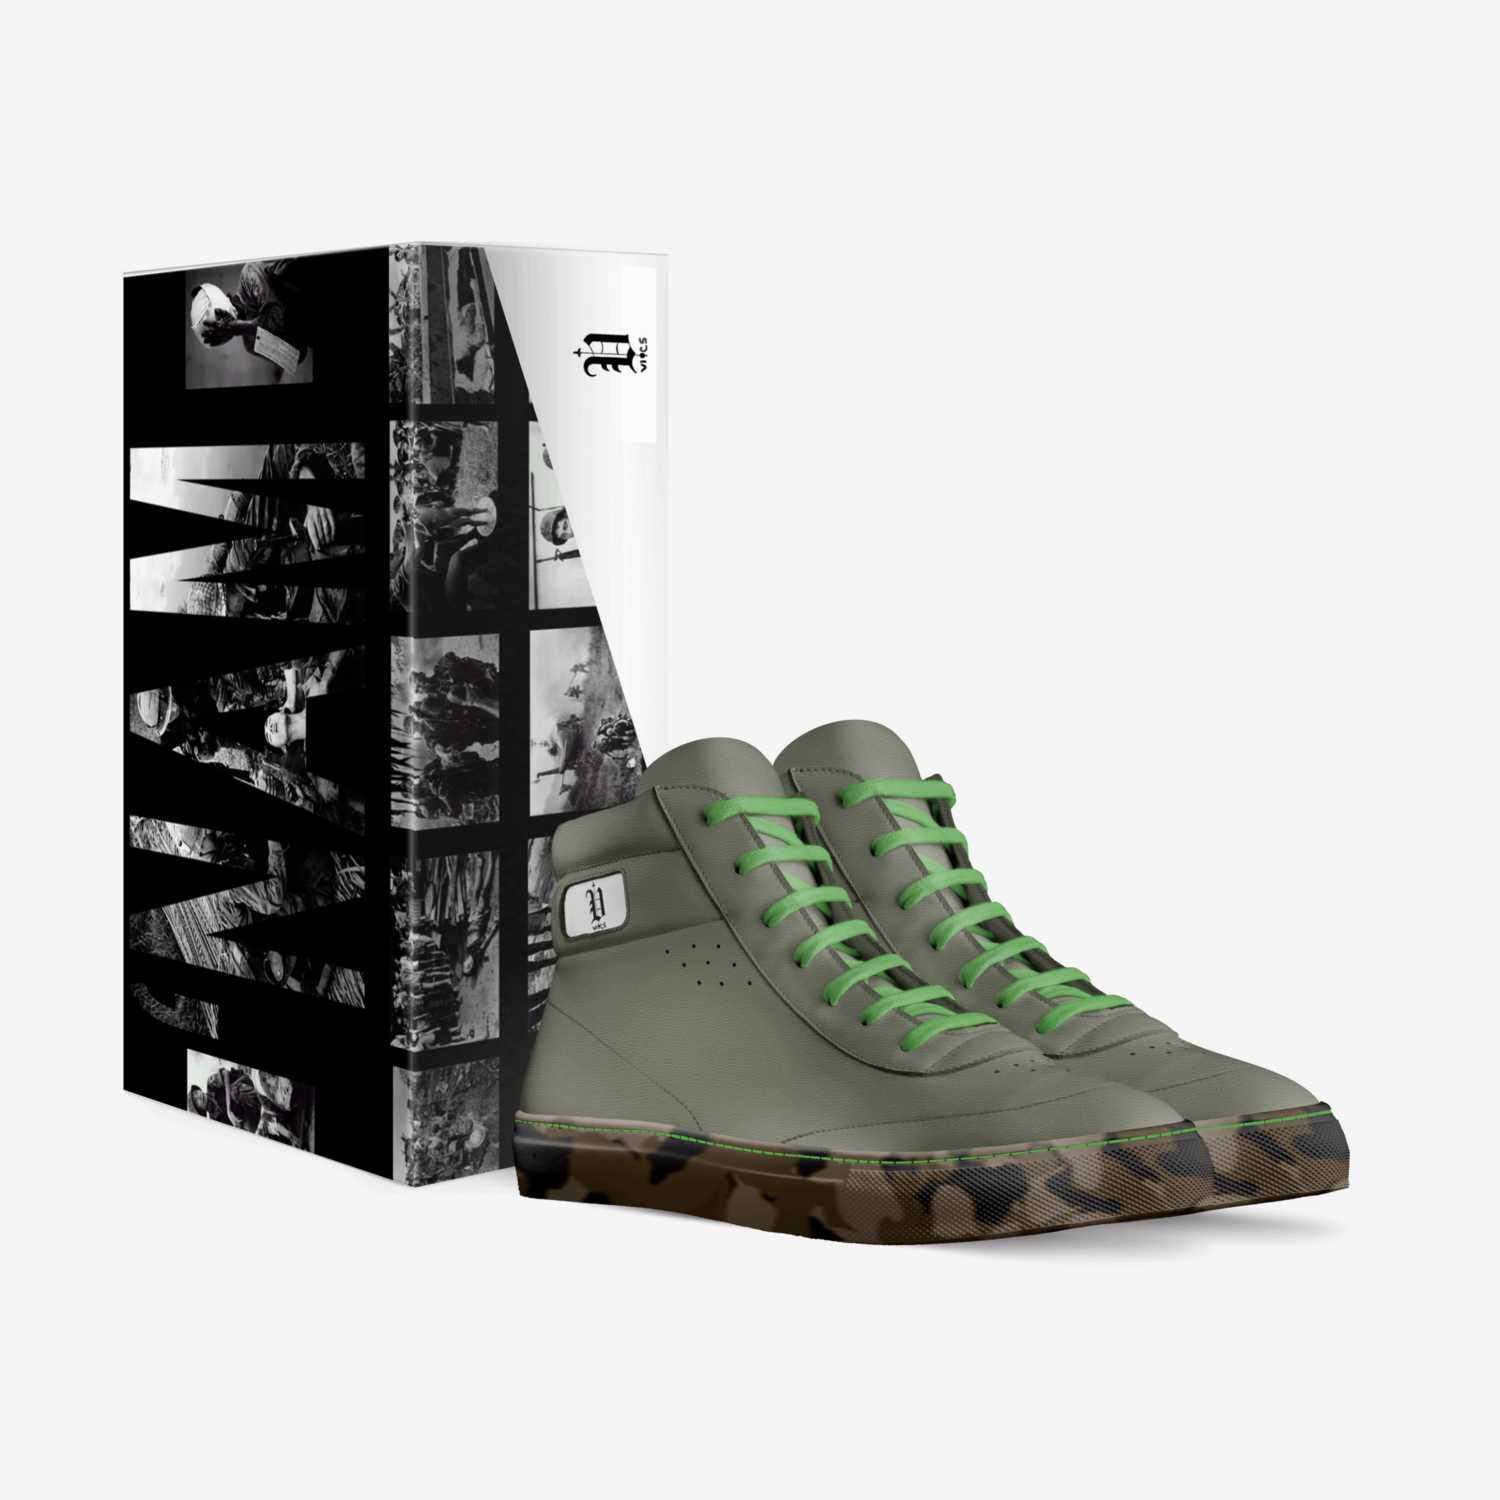 vics vitenam custom made in Italy shoes by Brayden Murphy | Box view